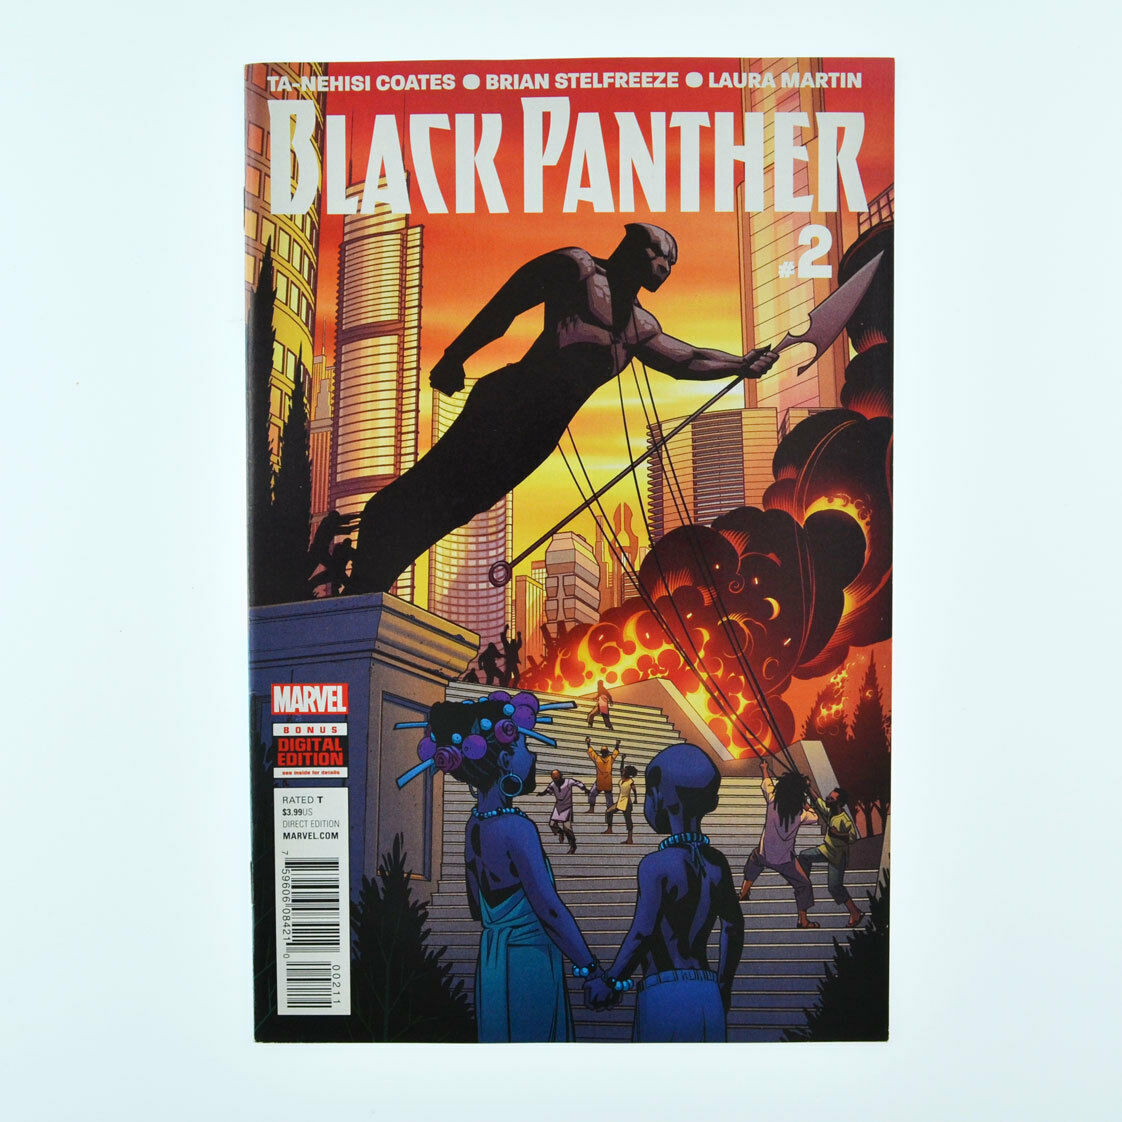 Black Panther #2 - MARVEL COMICS 2016 - VF+